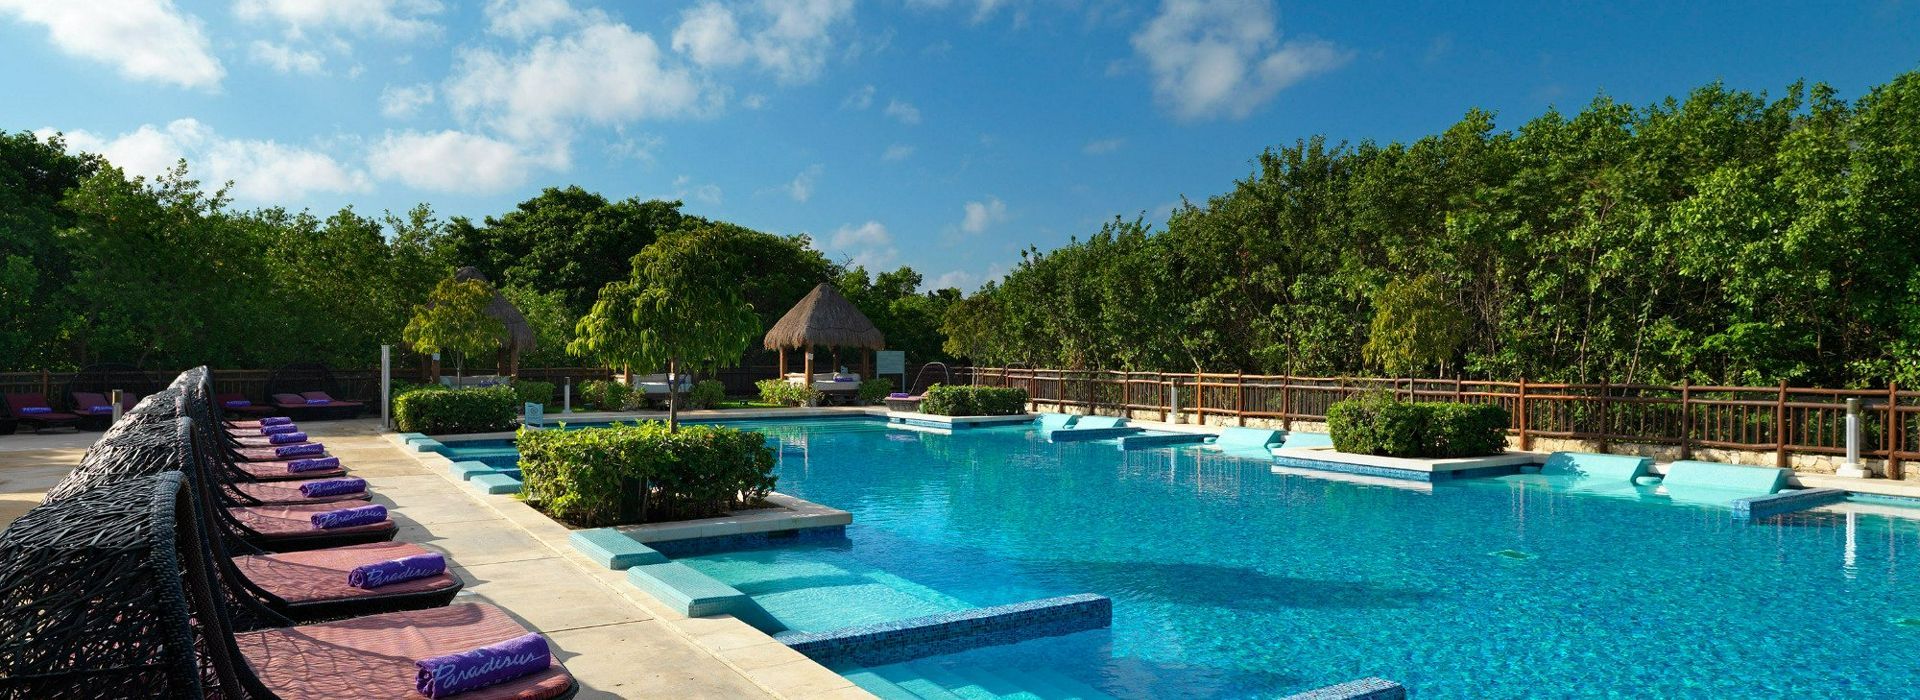 meliá-hotels-paradisus-playa-del-carmen-pool-1.jpg